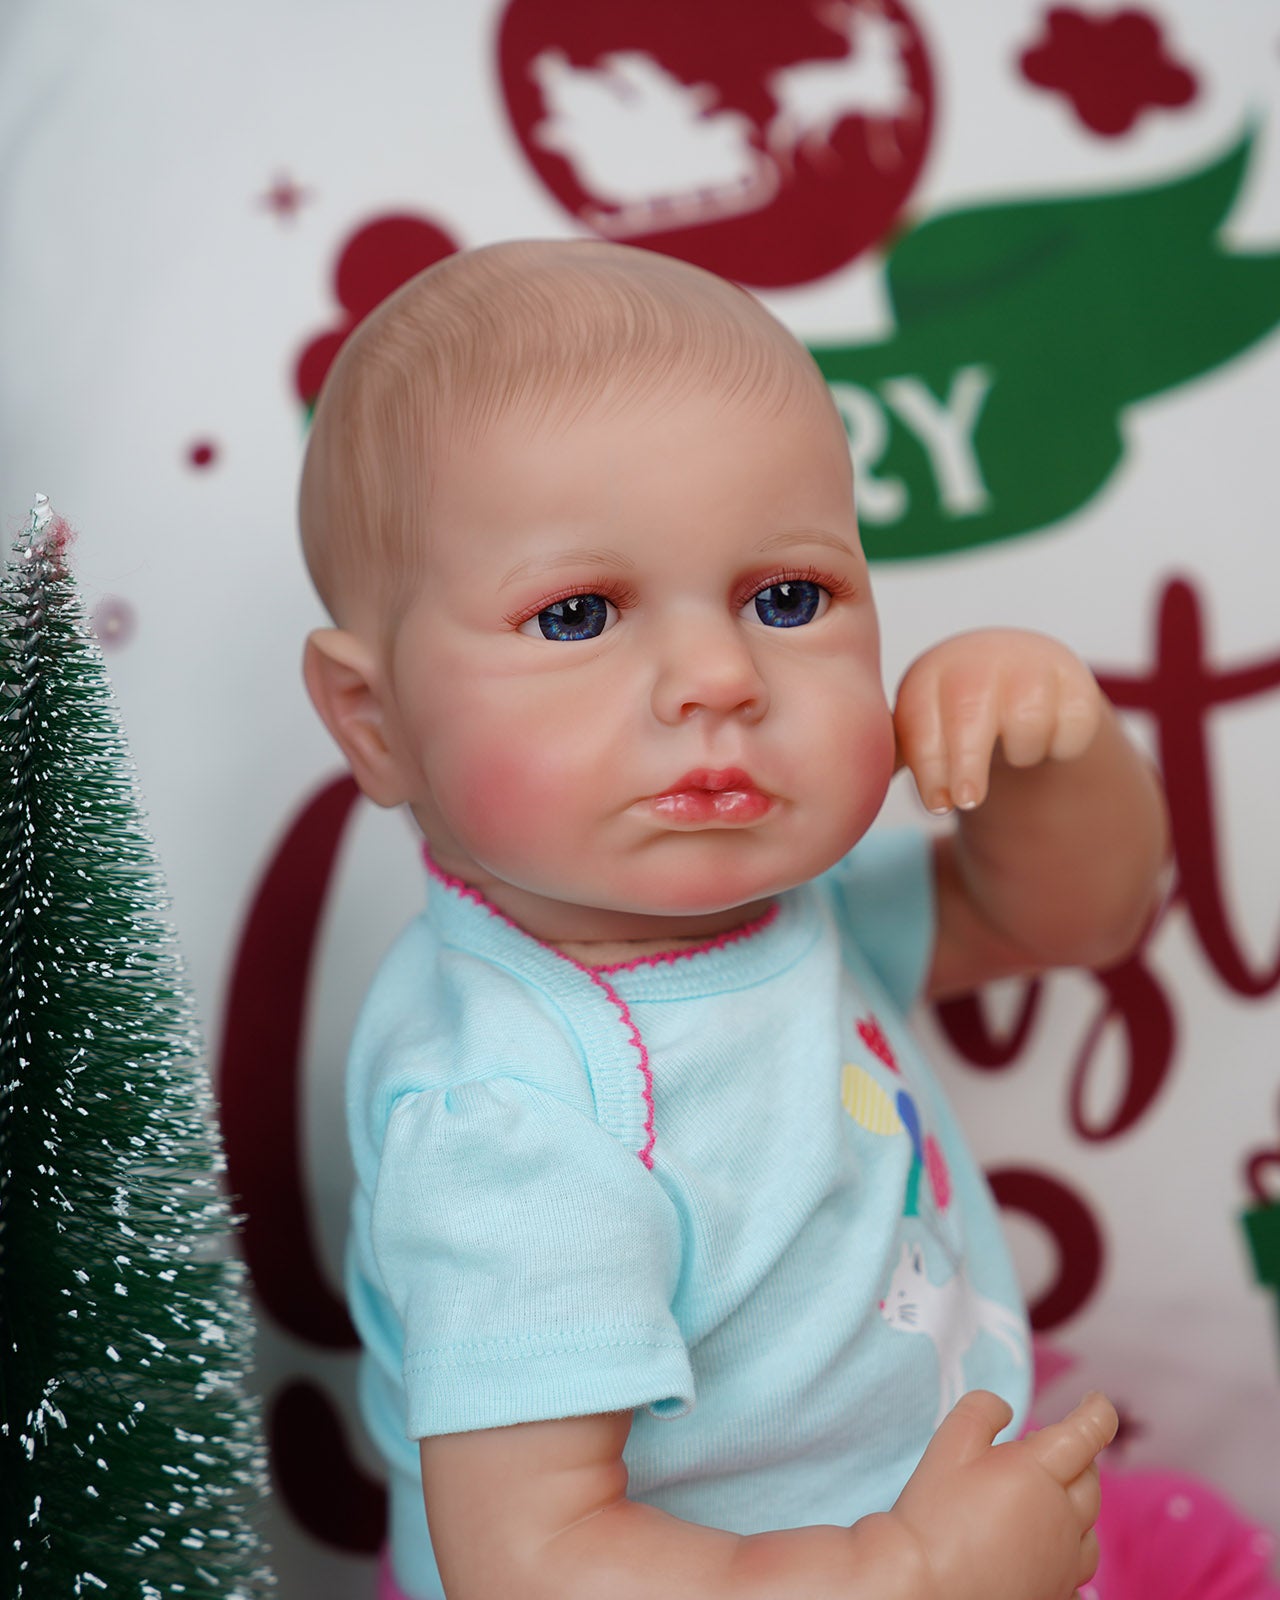 Carlin - 20" Reborn Baby Dolls Newborn Chubby Girl with Soft Cloth Body, Handmade Vinyl&Real Life Features